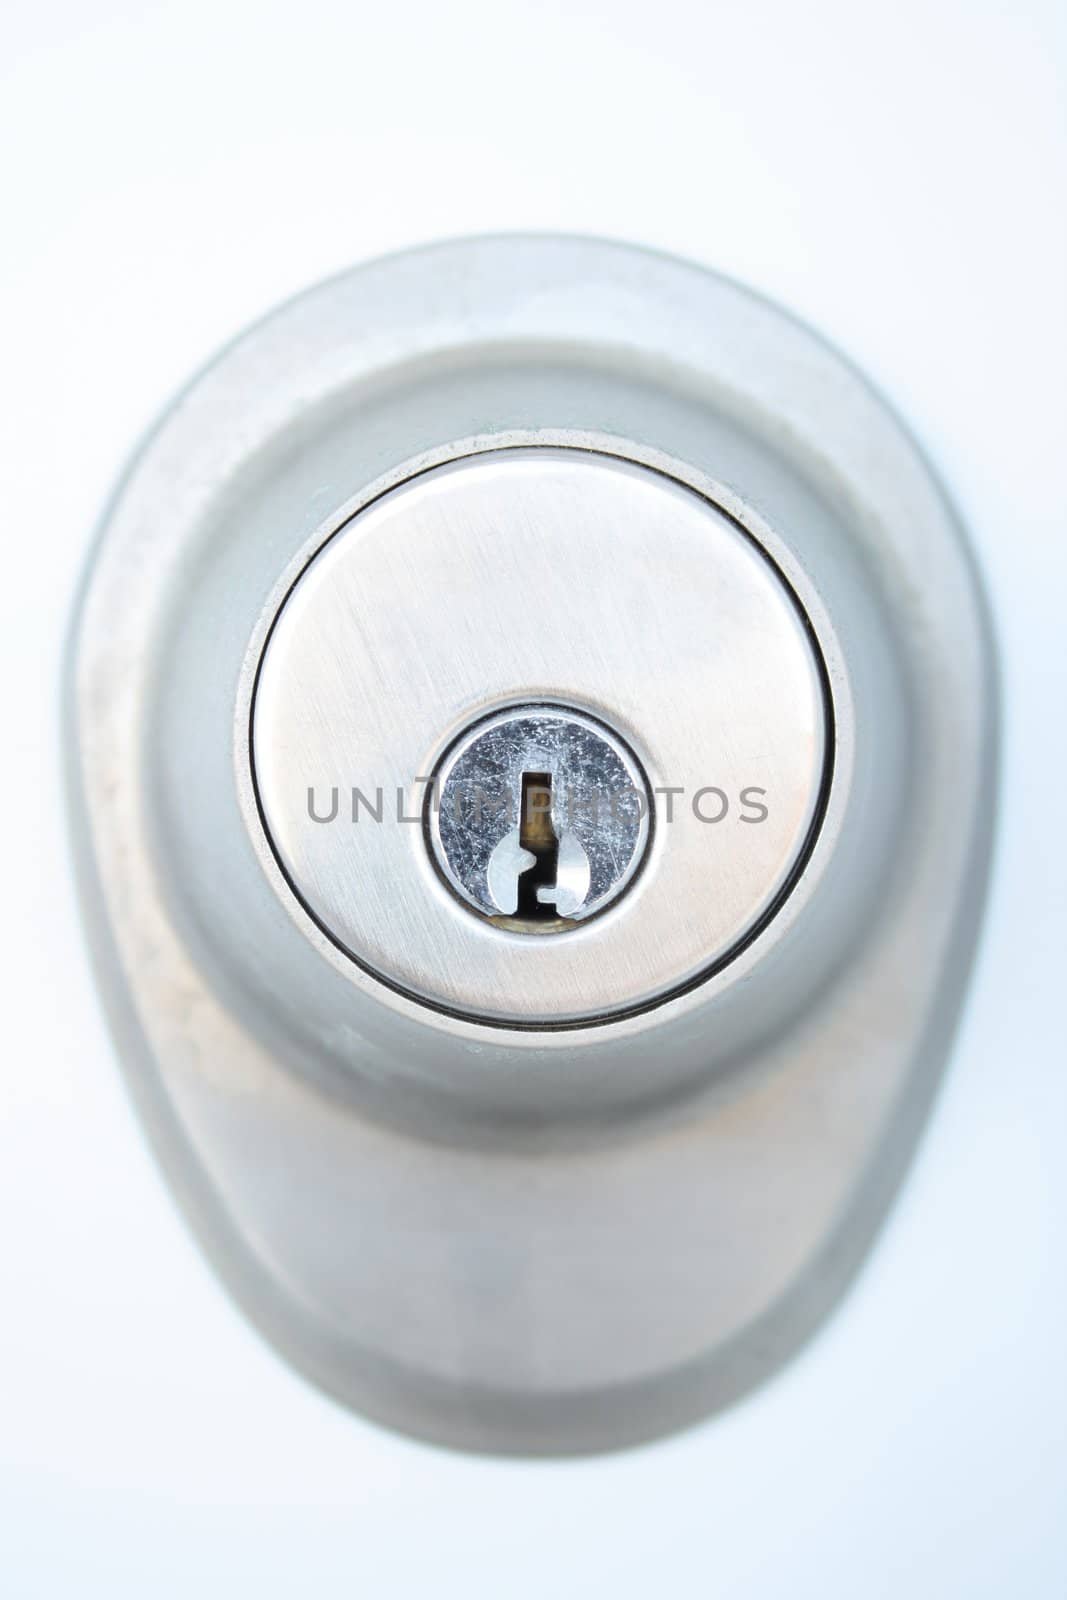 Metallic door lock with keyhole by anikasalsera